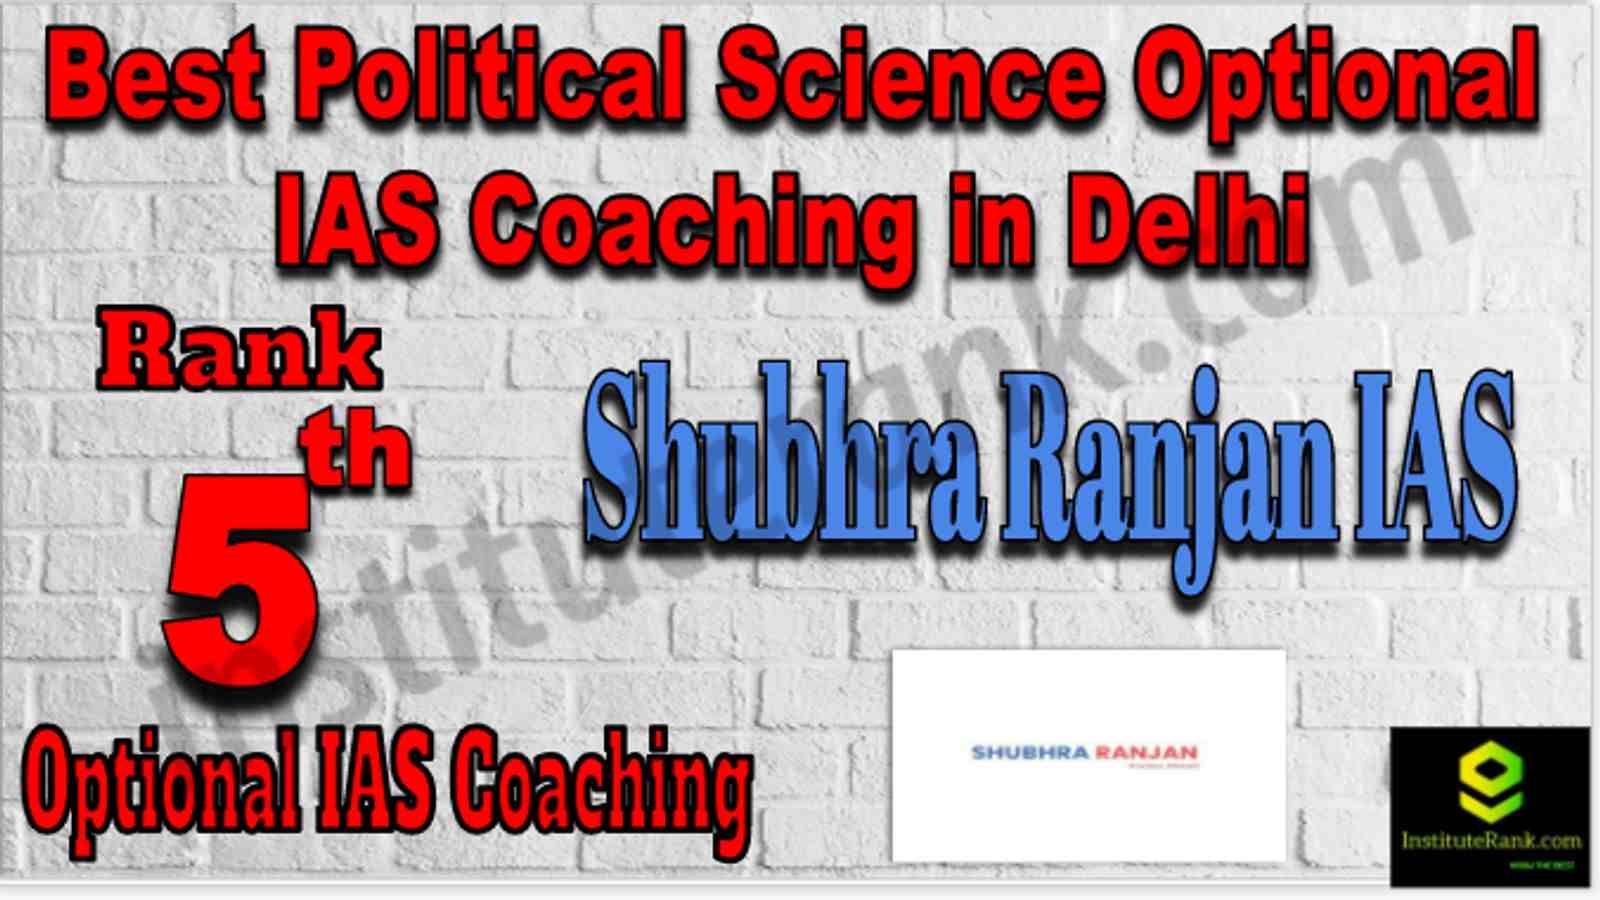 Rank 5 Best Political Science Optional IAS coachings in Delhi